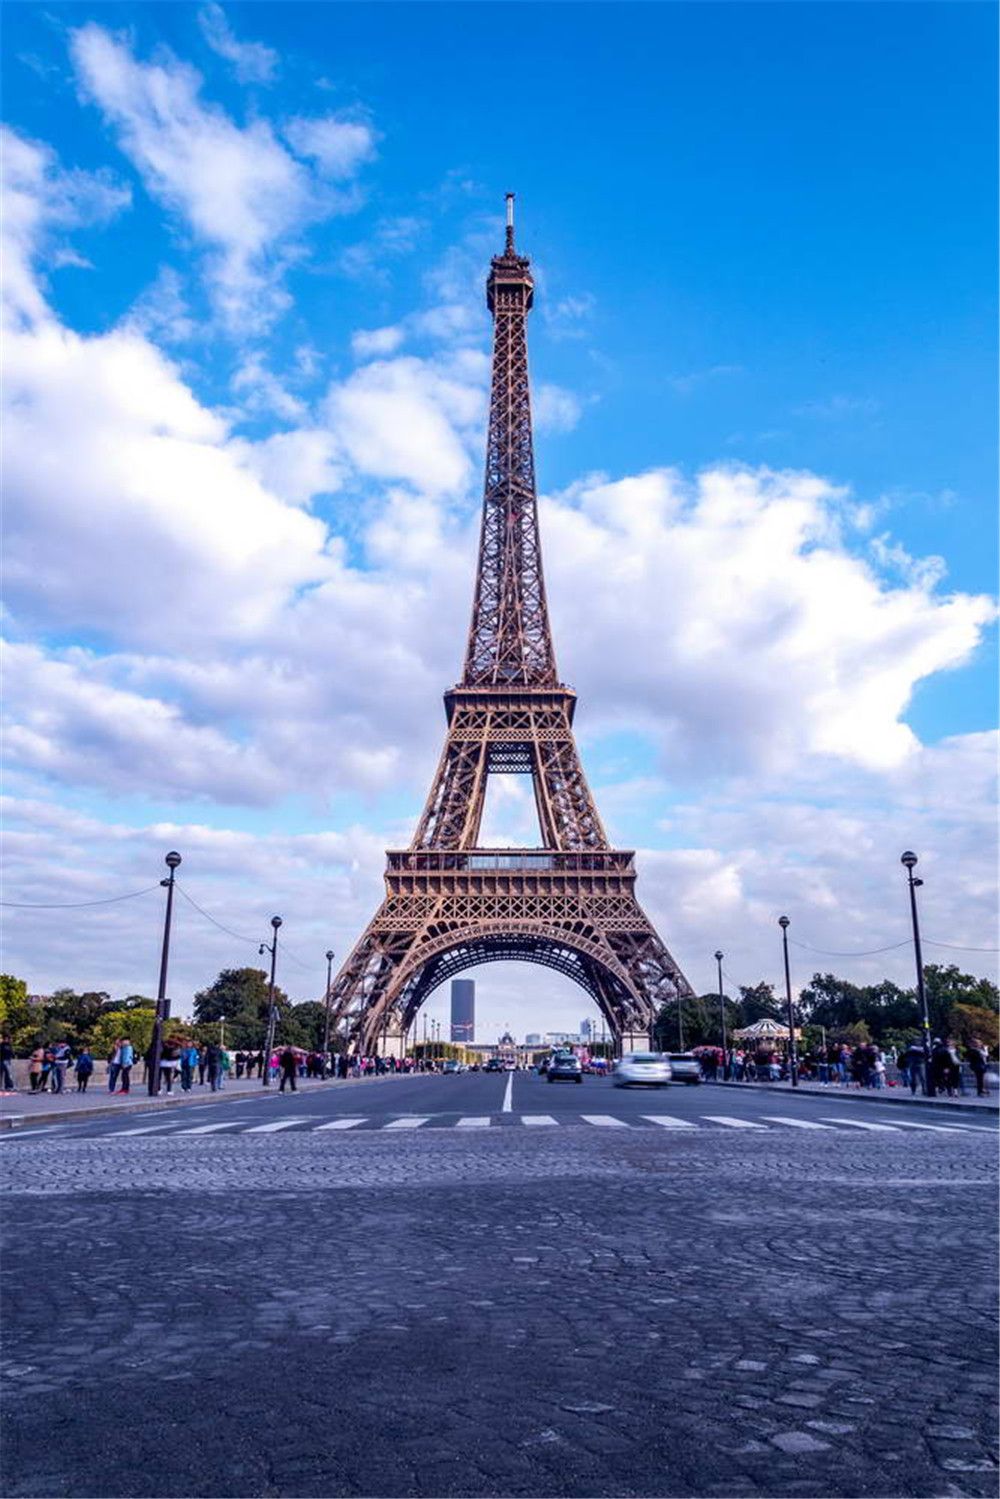 2019 Paris Eiffel Tower Photography Backdrop Printed Blue Sky White